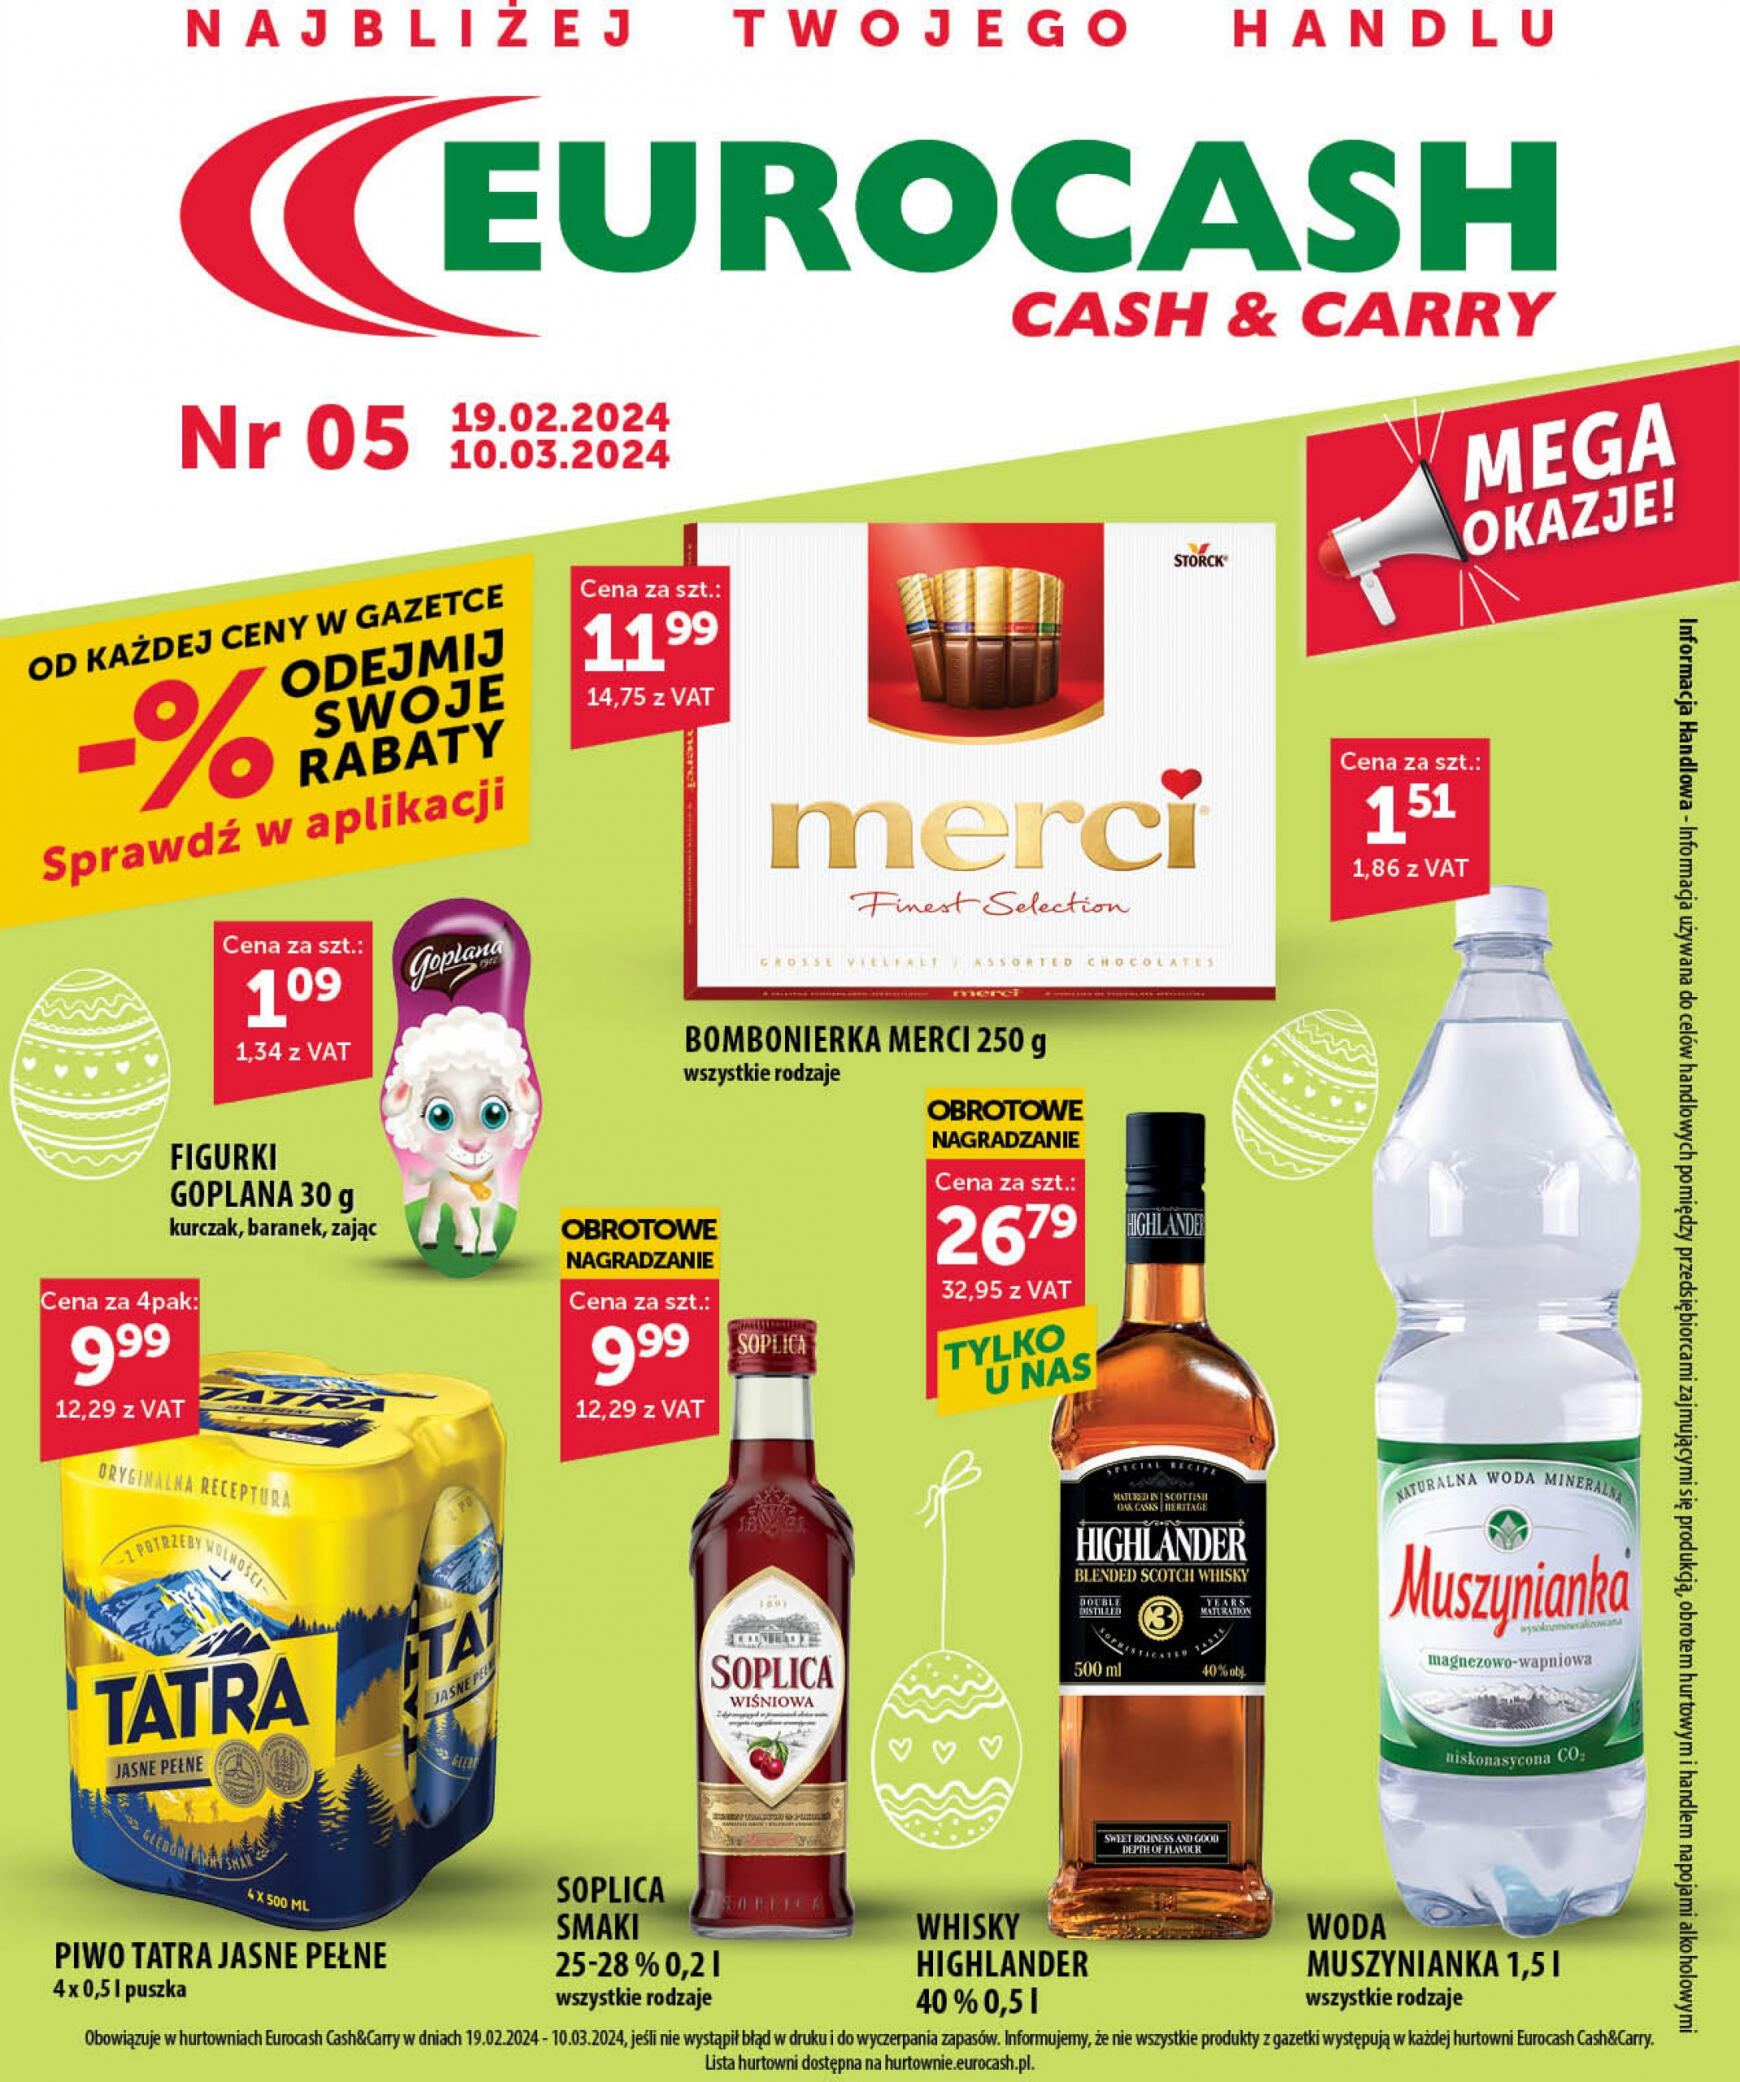 eurocash - Eurocash - Gazetka Cash&Carry obowiązuje od 19.02.2024 - page: 1